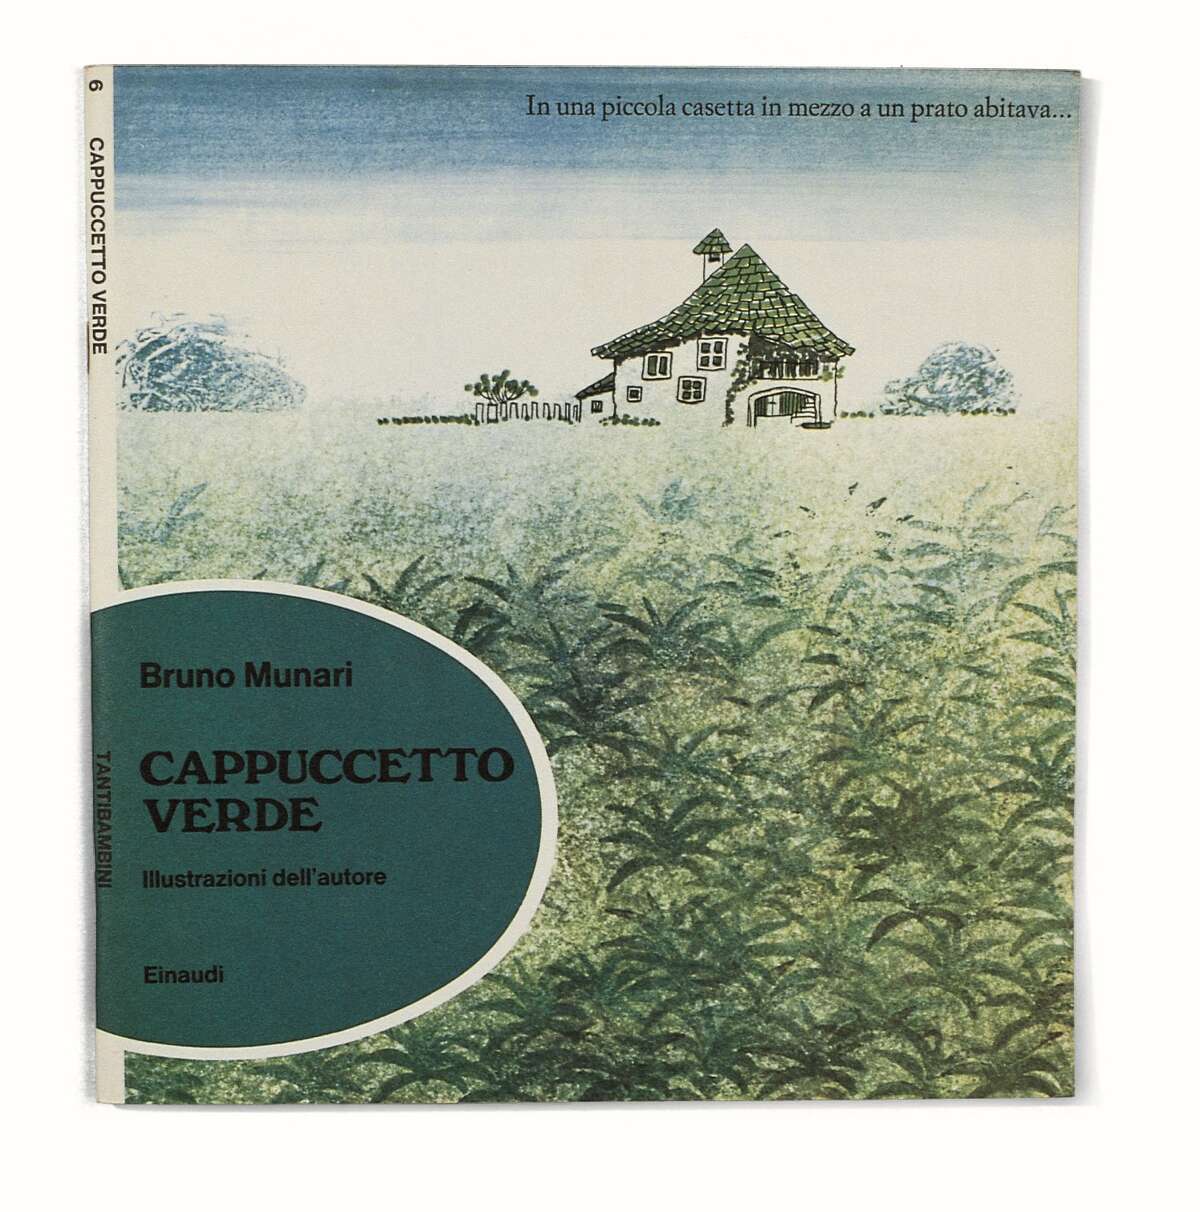 Bruno Munari's Cappuccetto verde (Little Green Riding Hood) “Tantibambini” series n. 6, Turin: Einaudi from 1972.